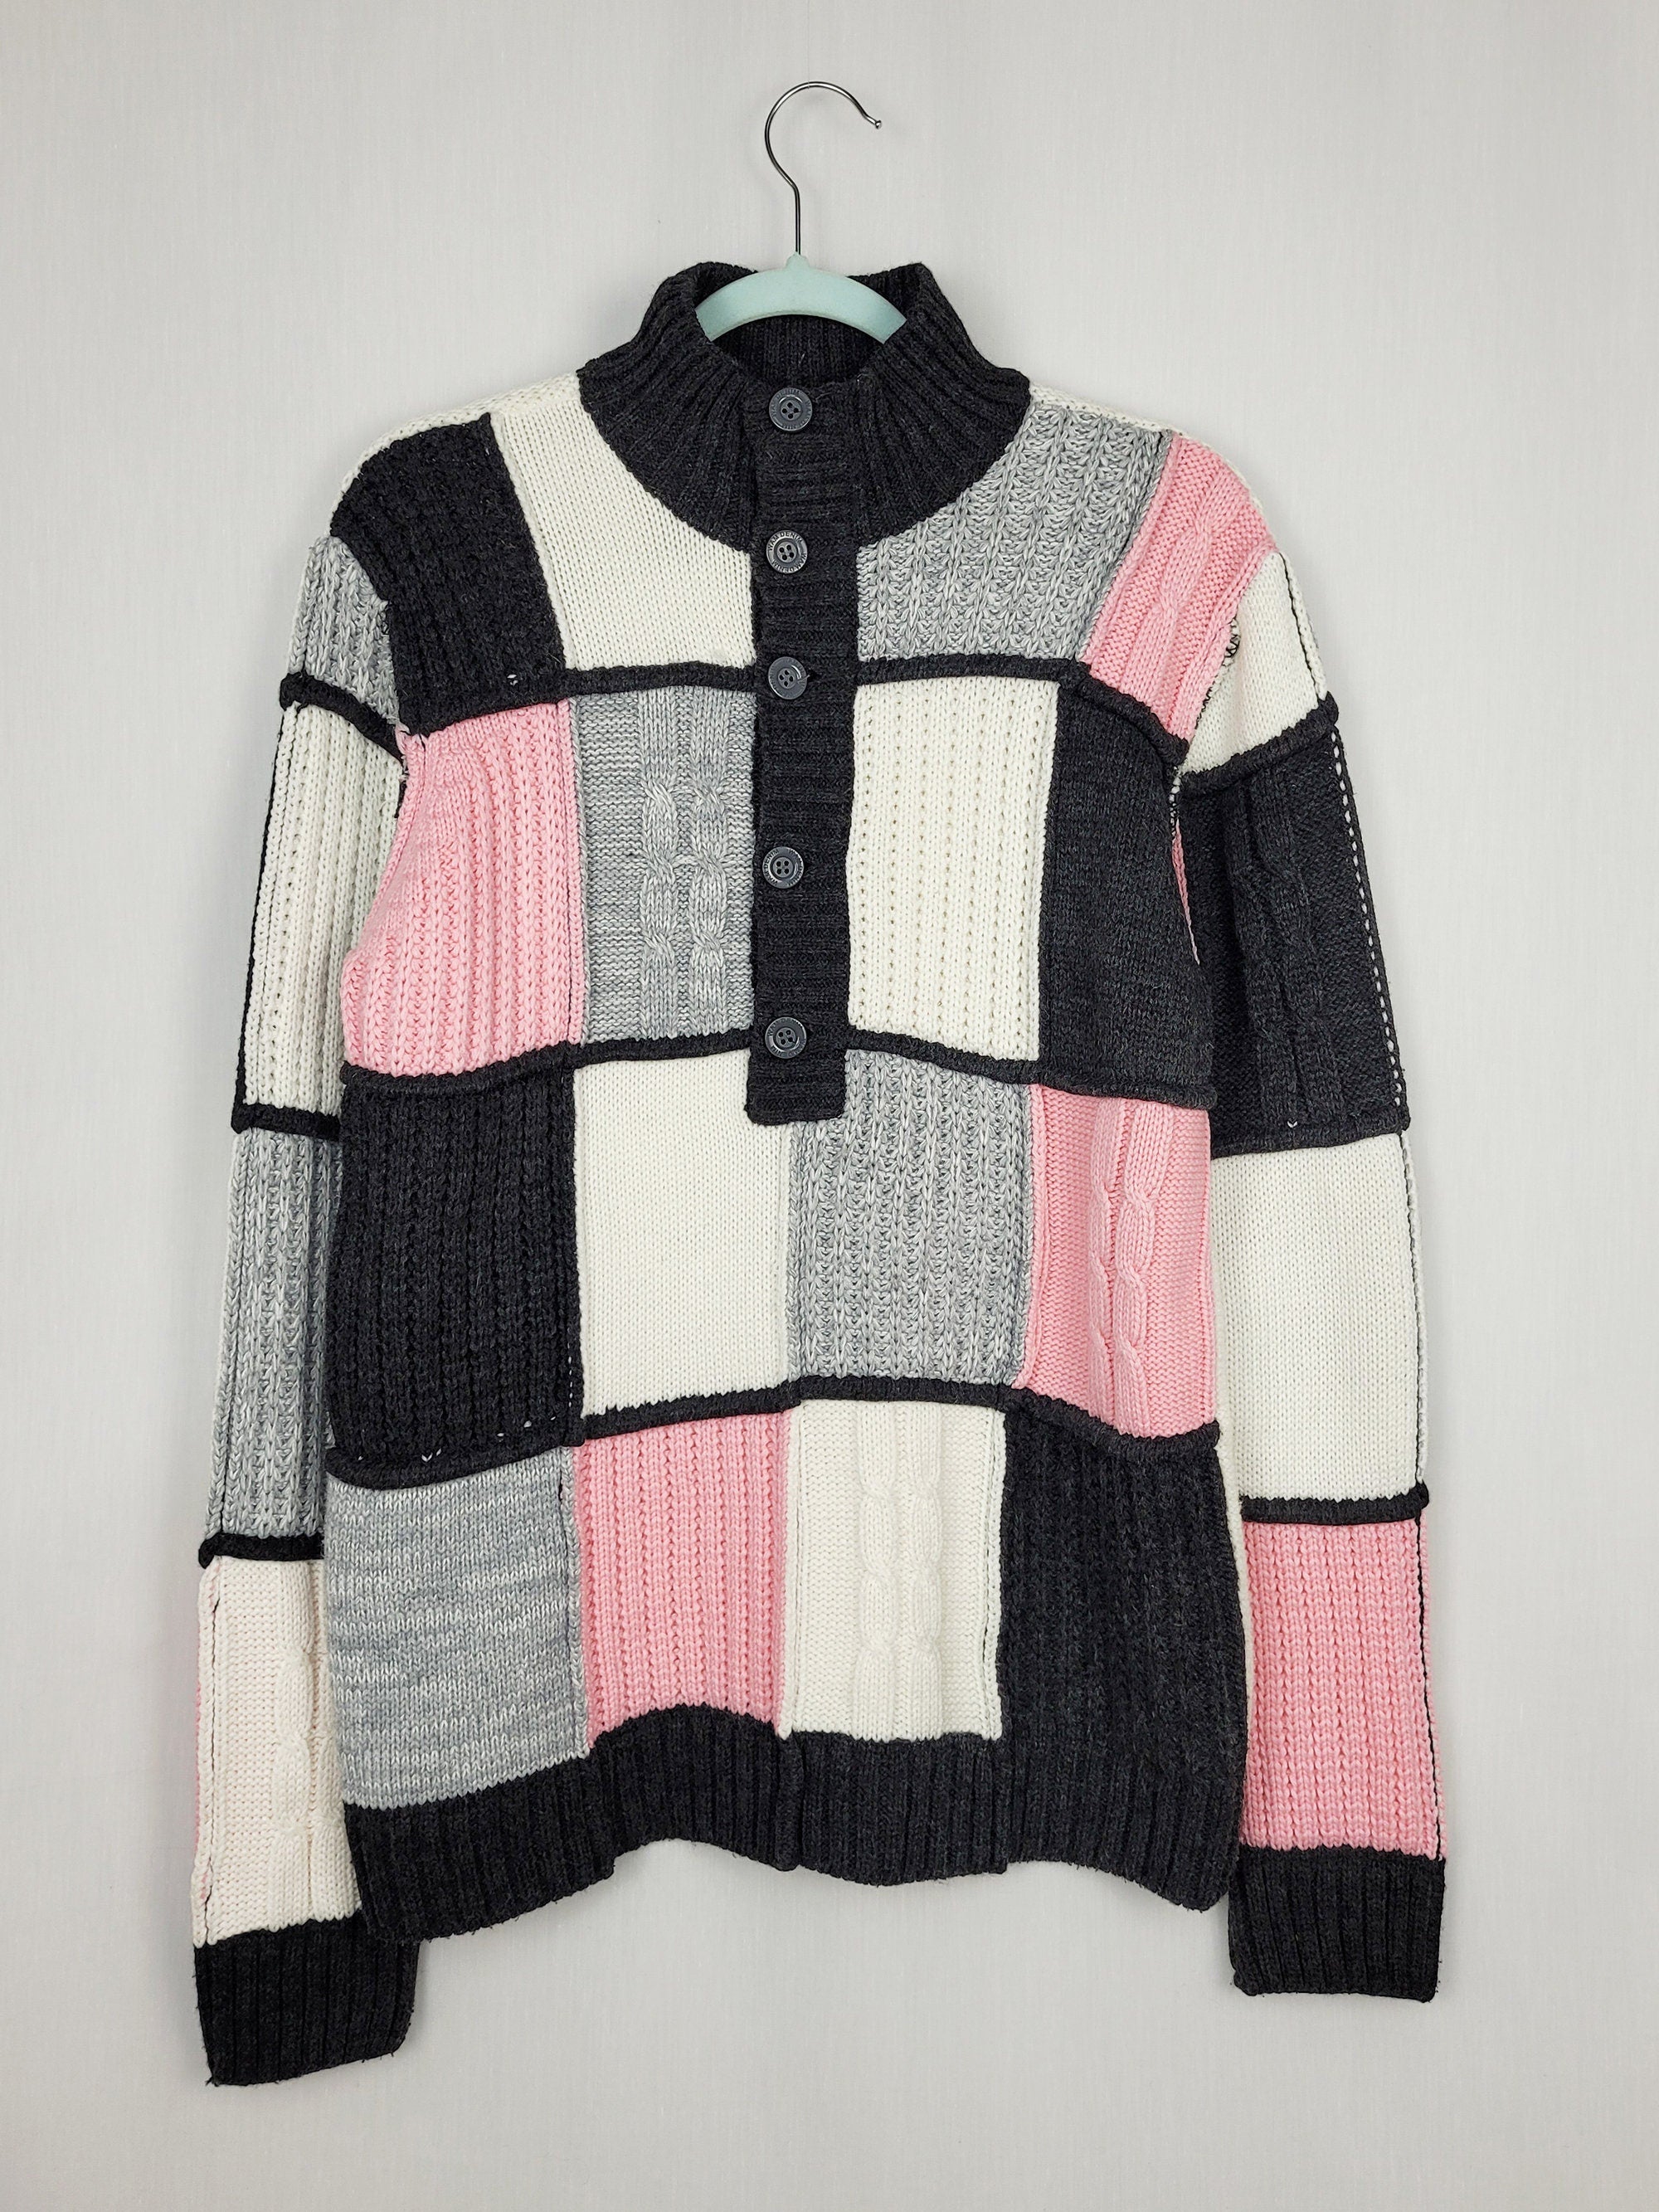 Vintage 90s color block menswear oversized jumper top